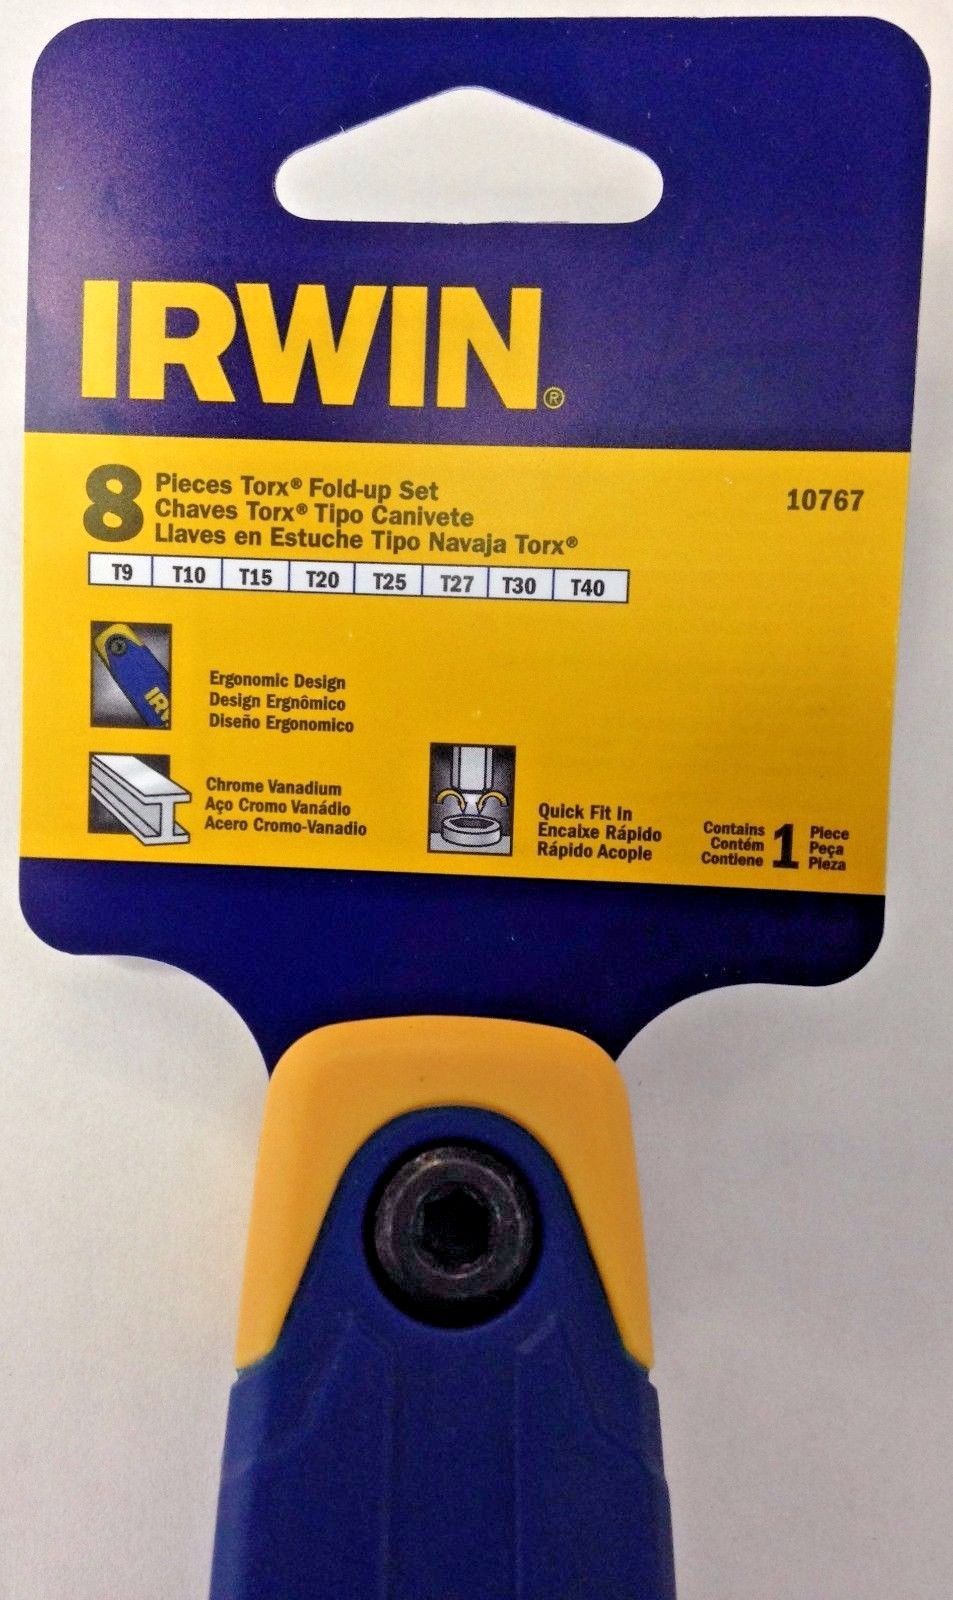 Irwin 10767 8 Piece Torx Fold-Up Set T9 - T40